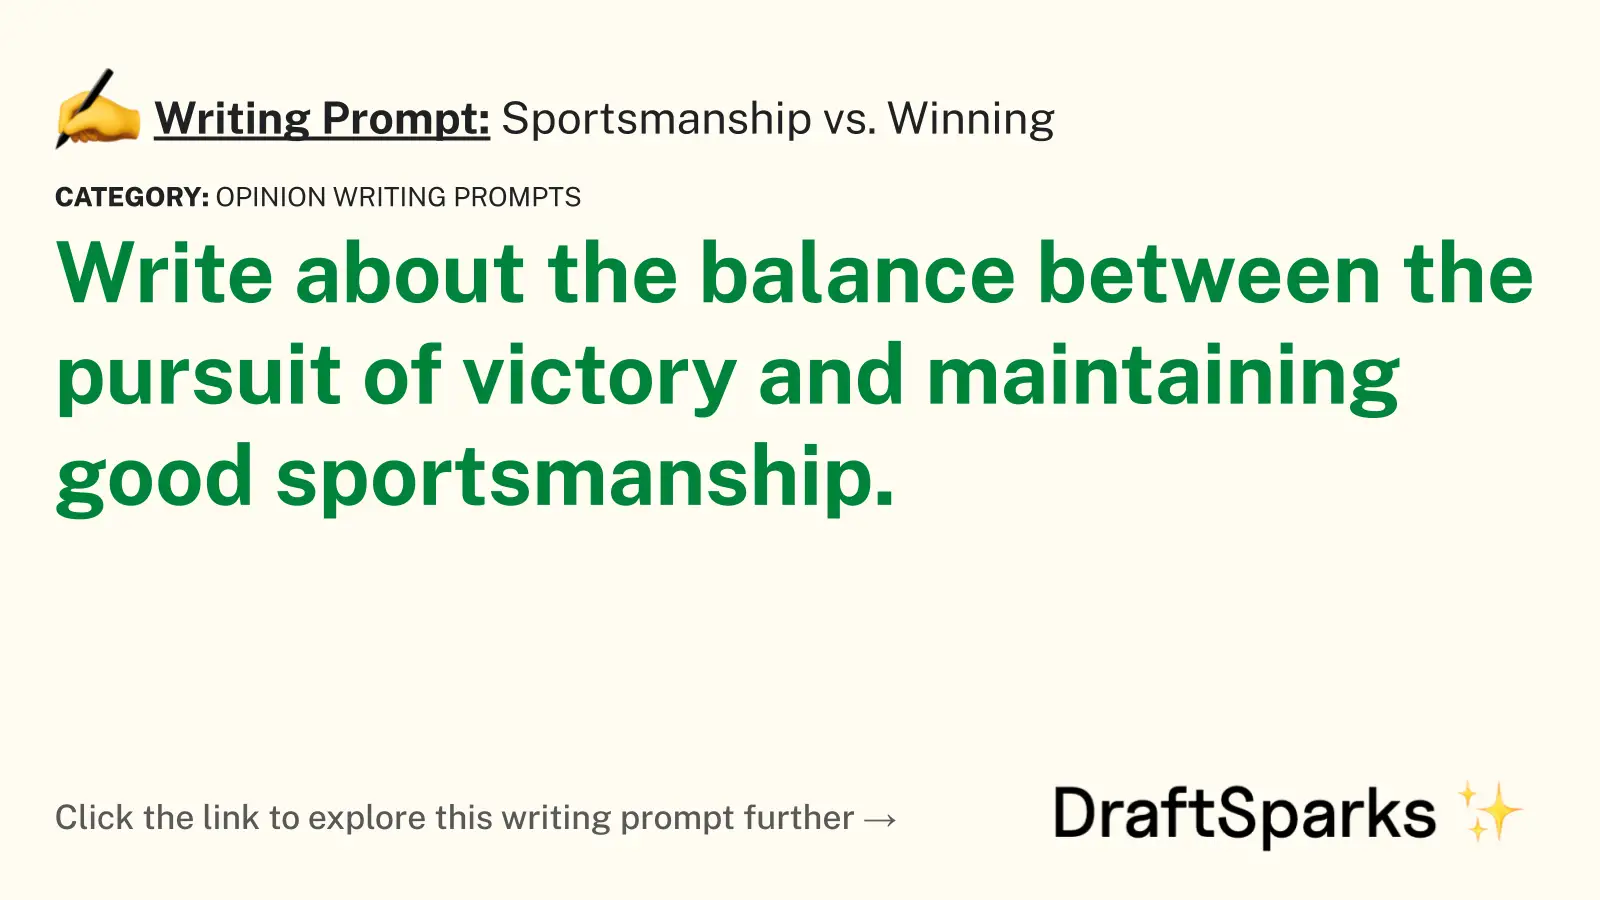 Sportsmanship vs. Winning